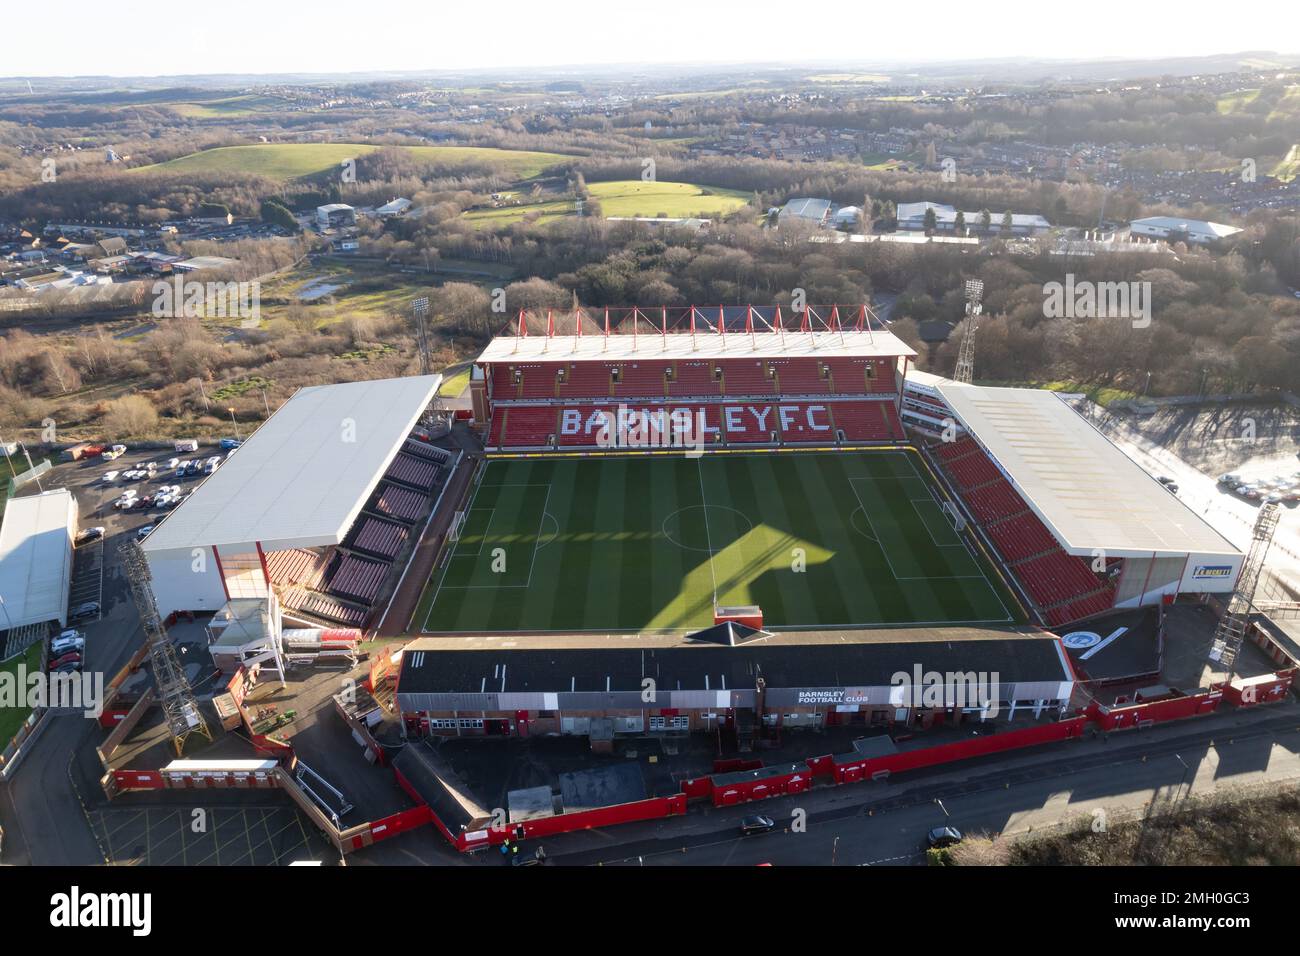 Barnsley FC football Club Oakwell Stadium de dessus drone vue aérienne ciel bleu Banque D'Images